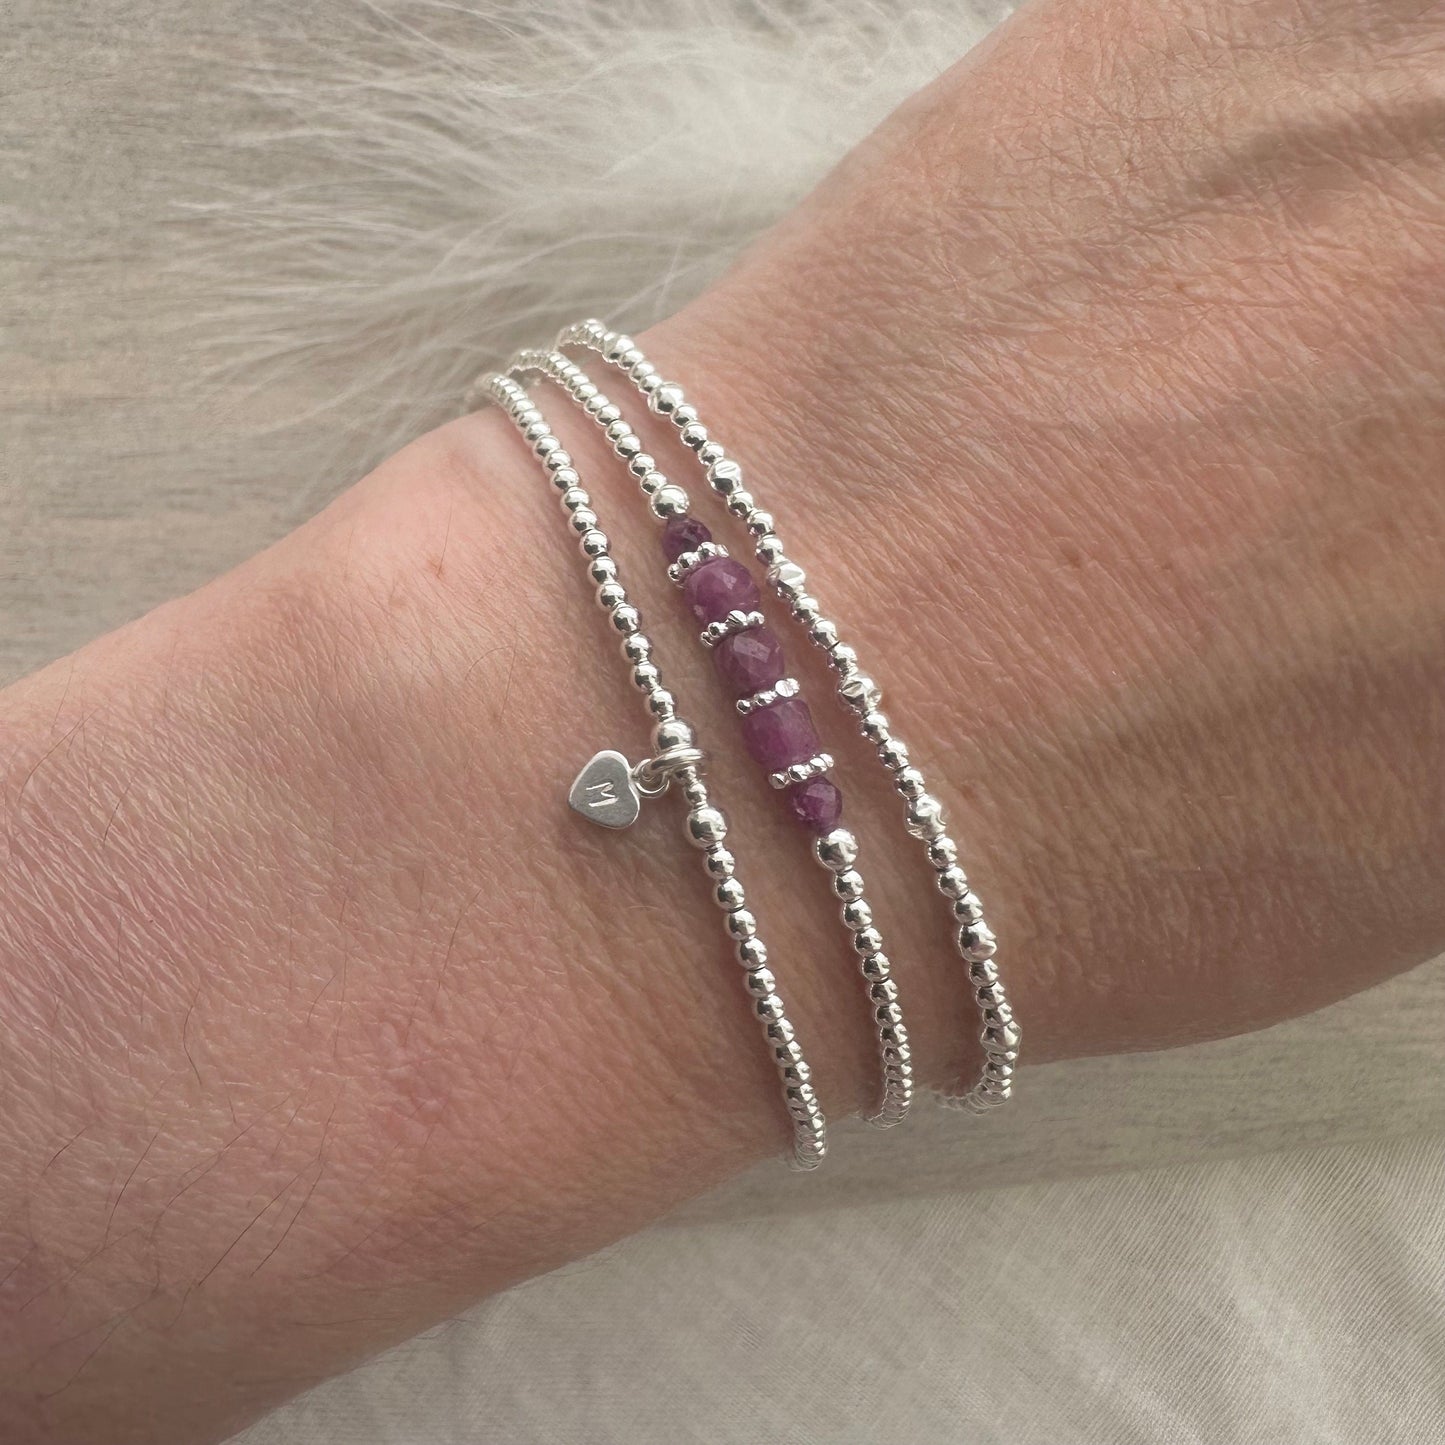 Personalised July Birthstone dark Ruby Bracelet Set, Dainty Sterling Silver Stacking Bracelets for Women